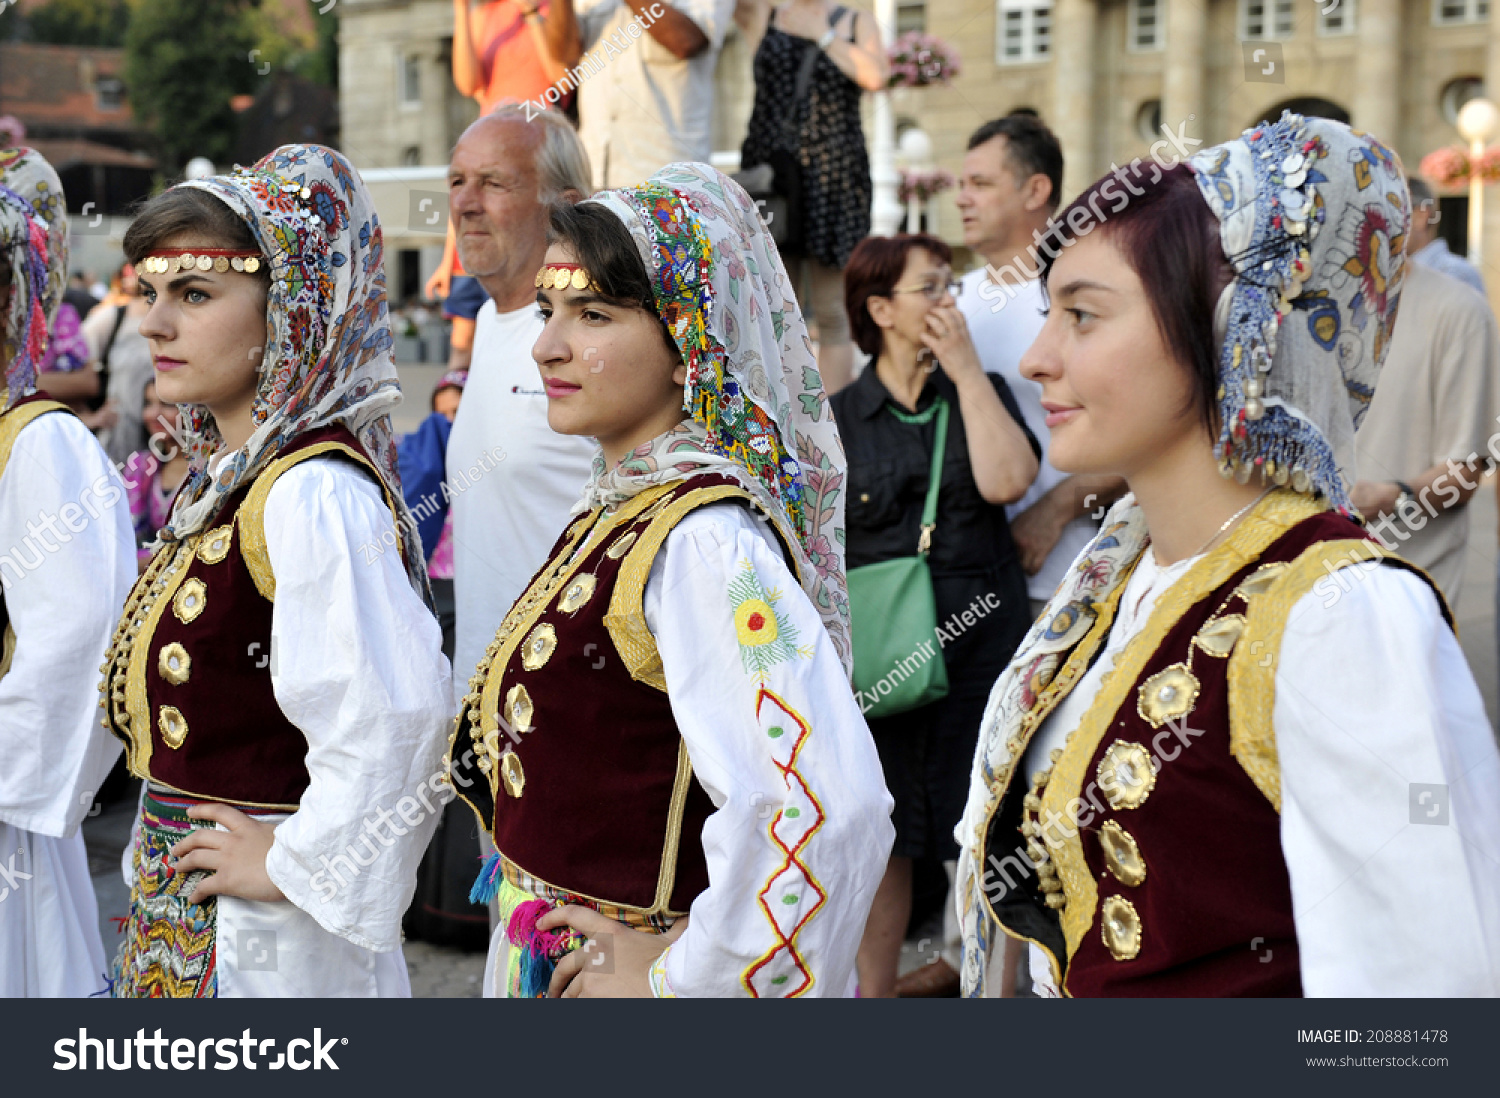 Members Folk Group Albanian Culture Society Stock Photo 208881478 ...